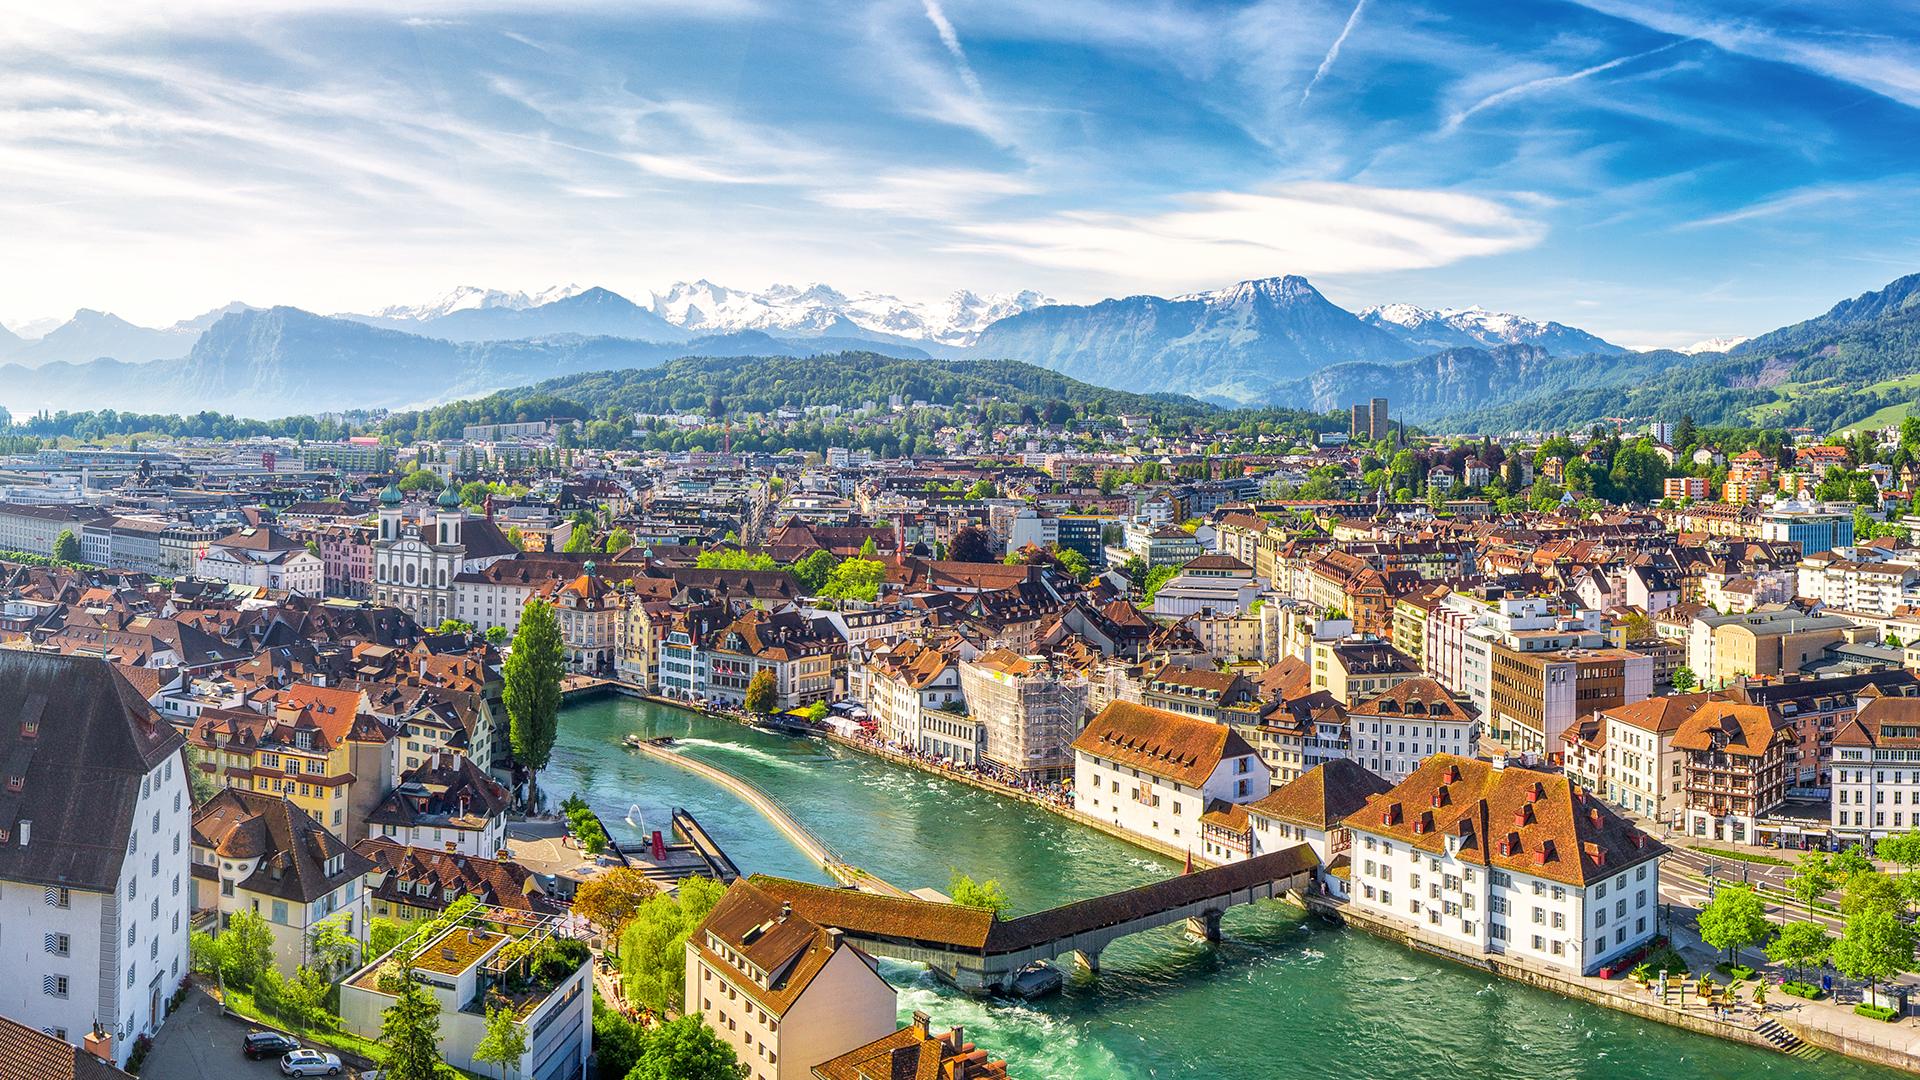 10Day Tour Oberammergau with Germany, Switzerland and Austria